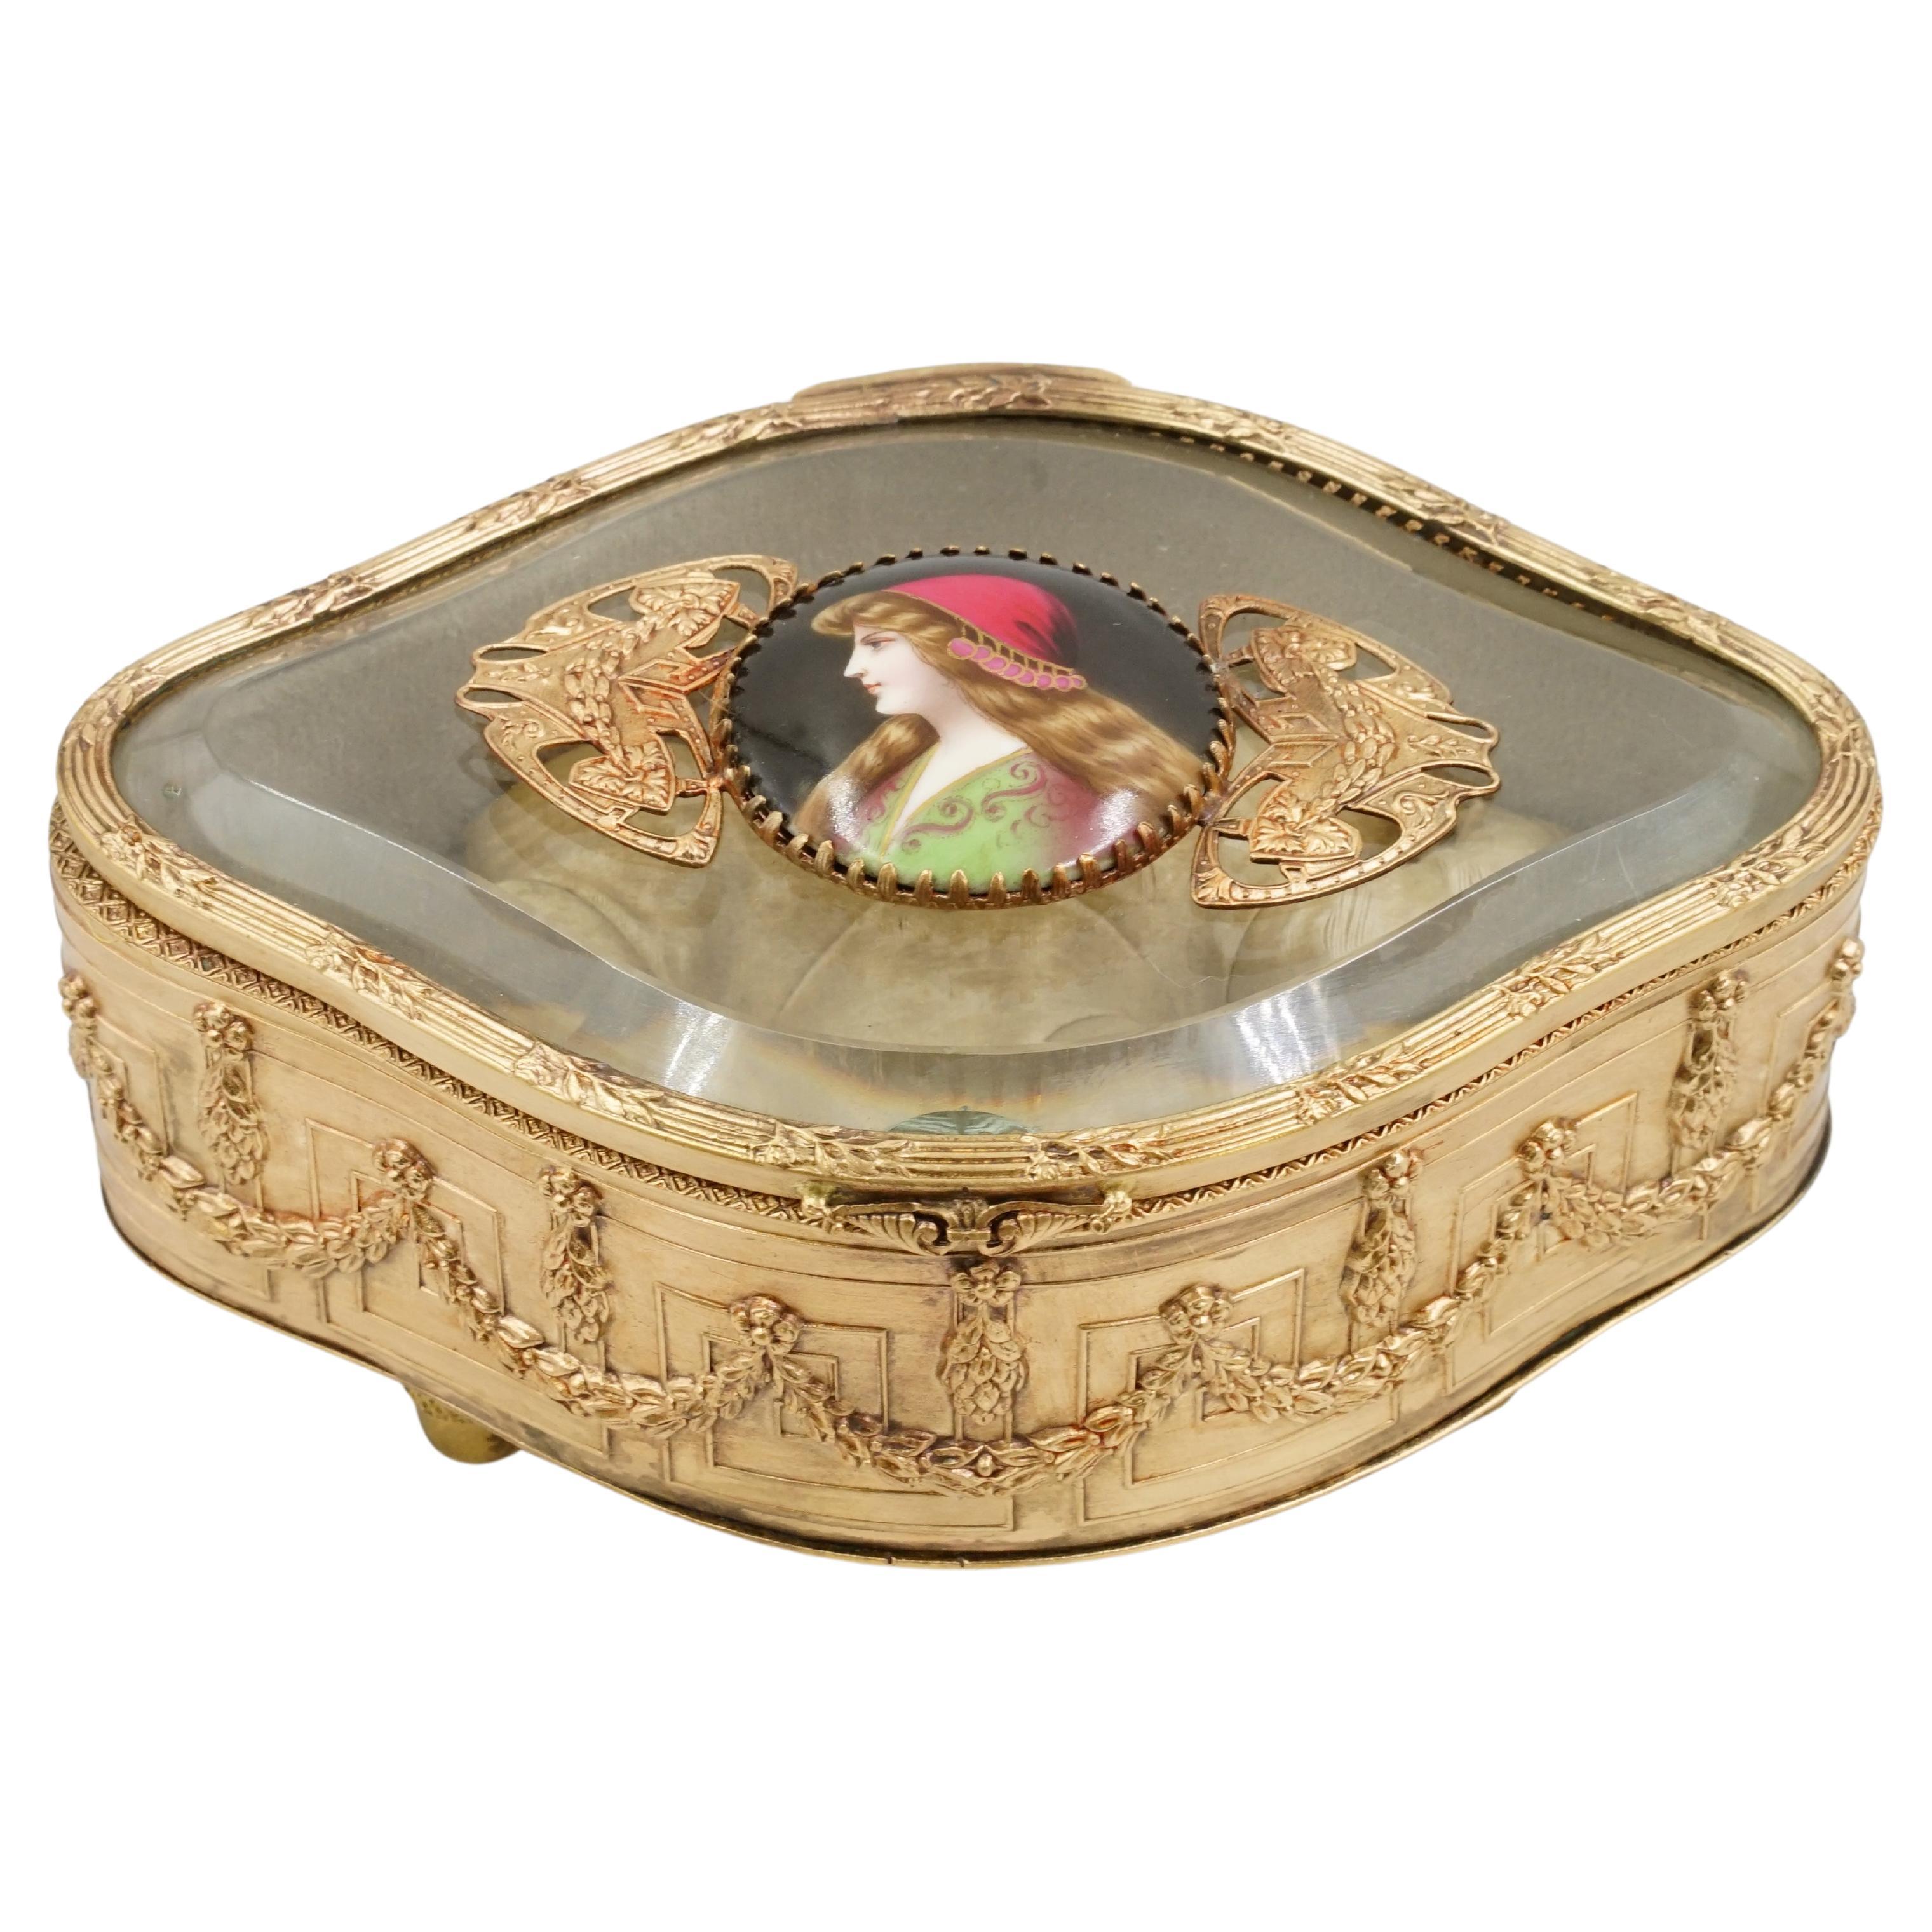 Art nouveau jewelry box